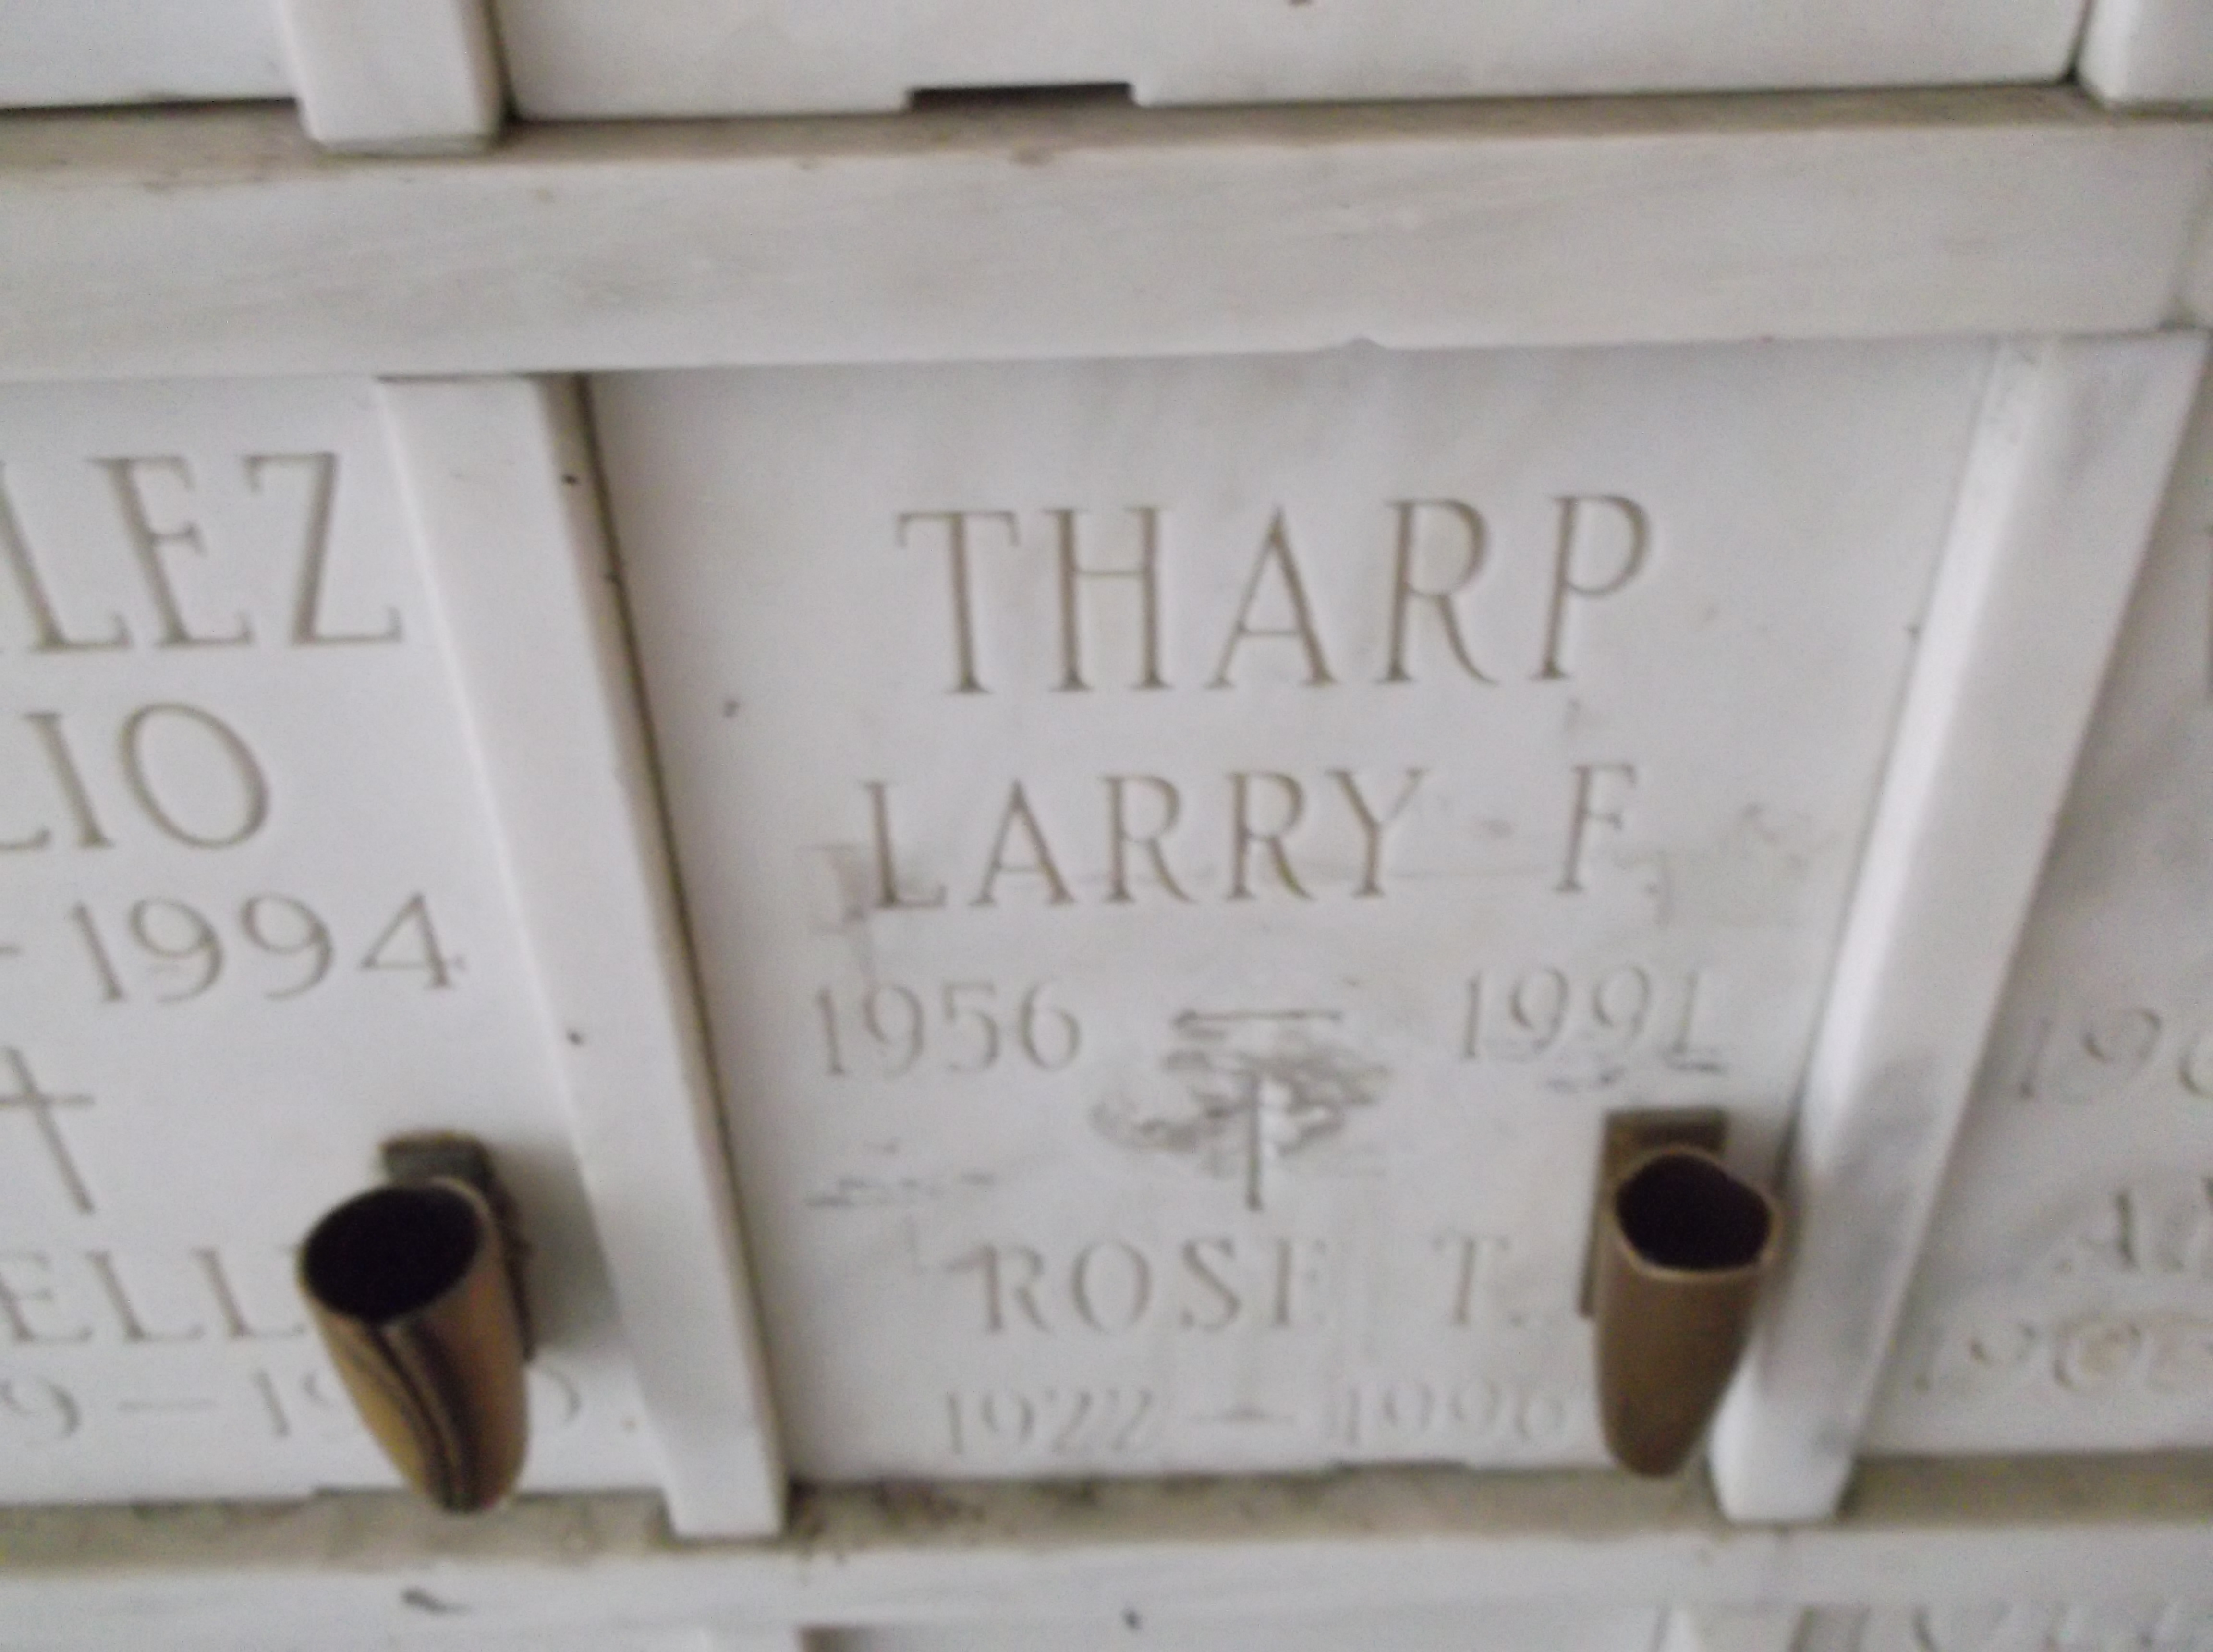 Larry F Tharp